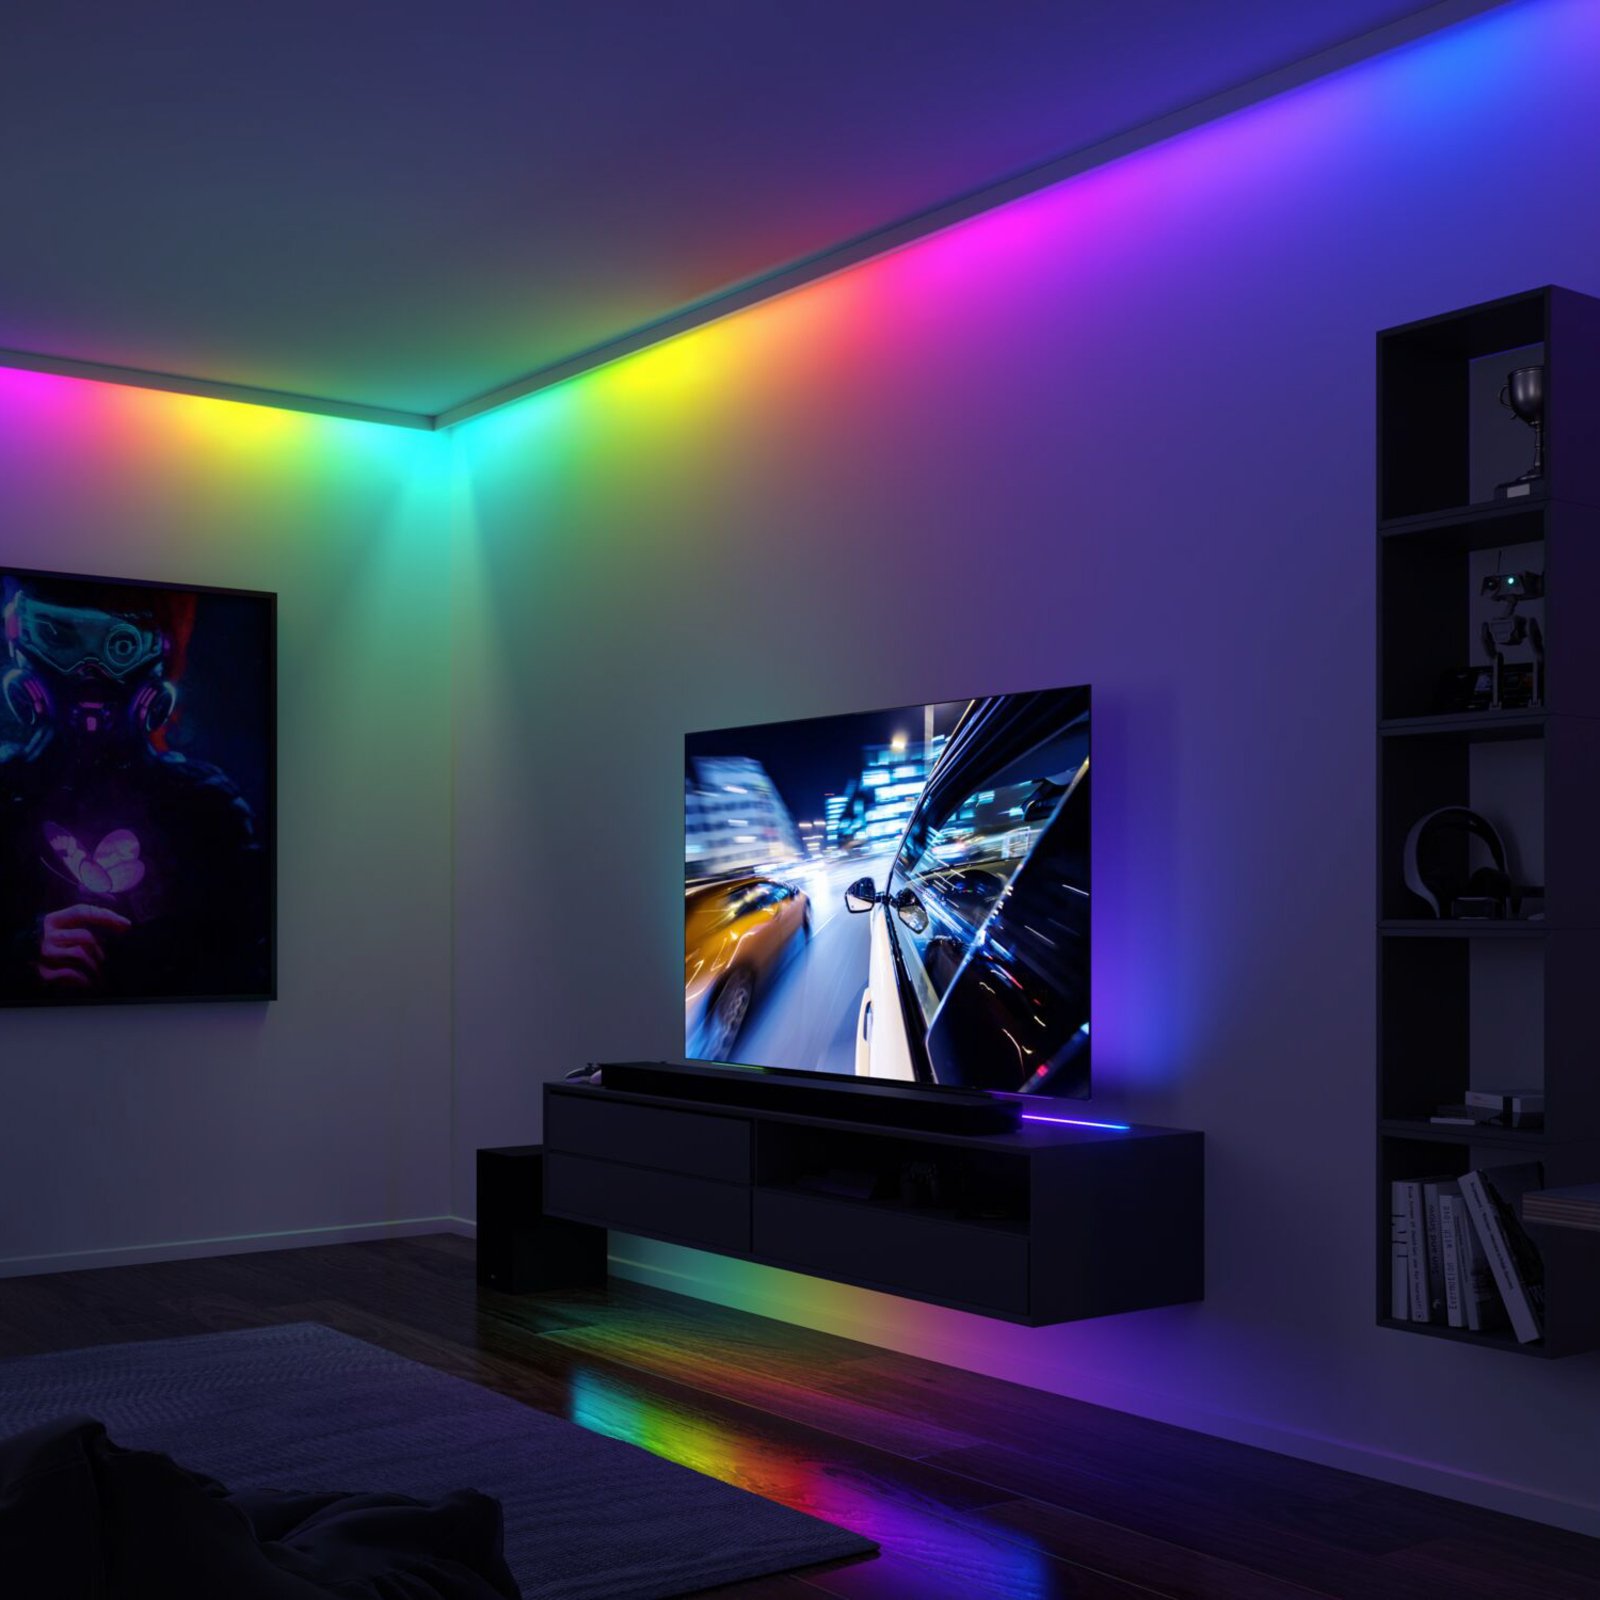 Paulmann EntertainLED taśma LED, RGB, Set, 5m